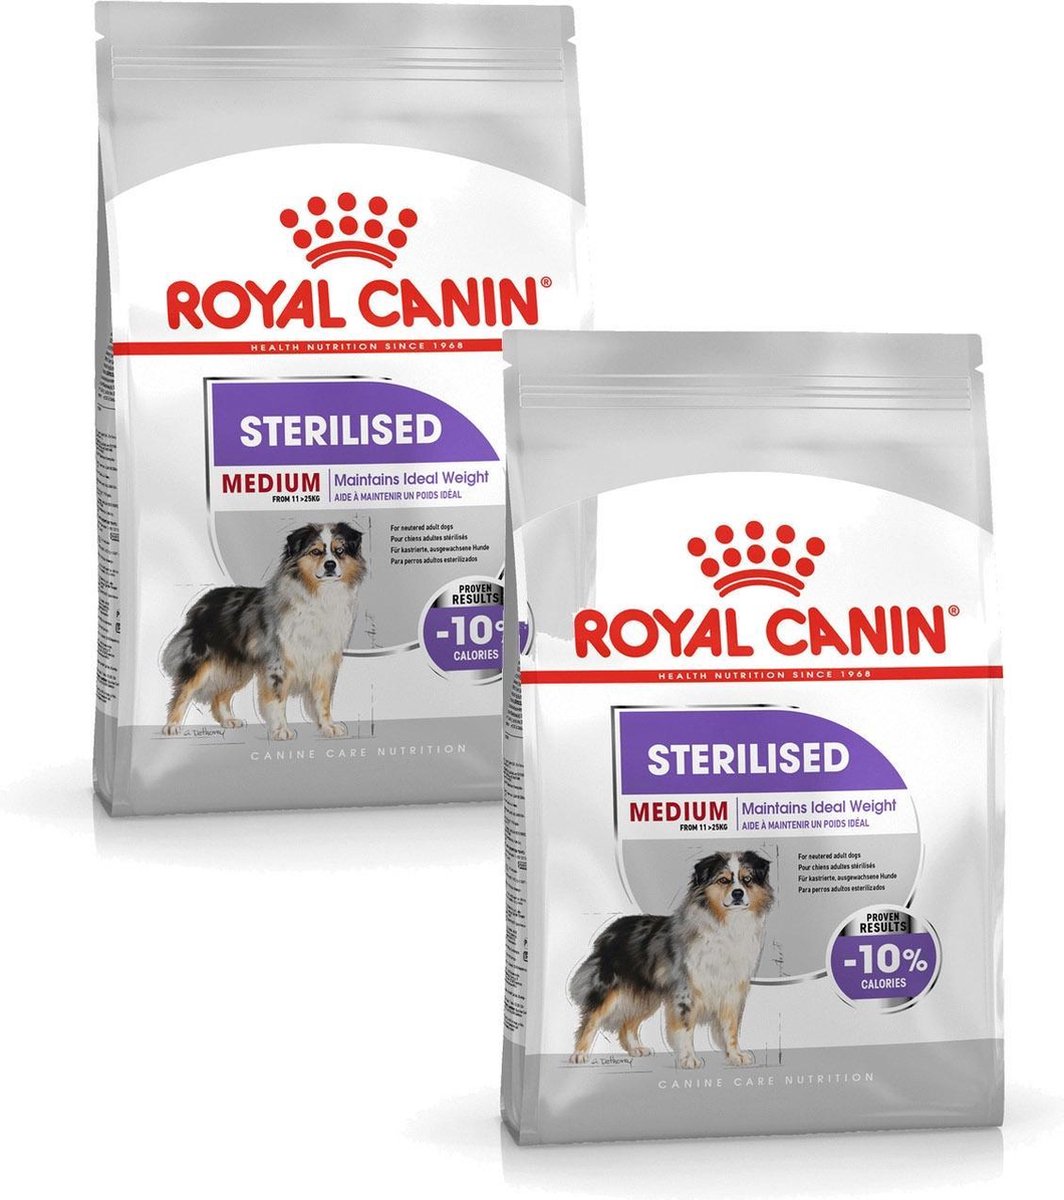 Vervullen kogel vreugde Royal Canin Ccn Sterilised Medium - Hondenvoer - 2 x 10 kg | bol.com